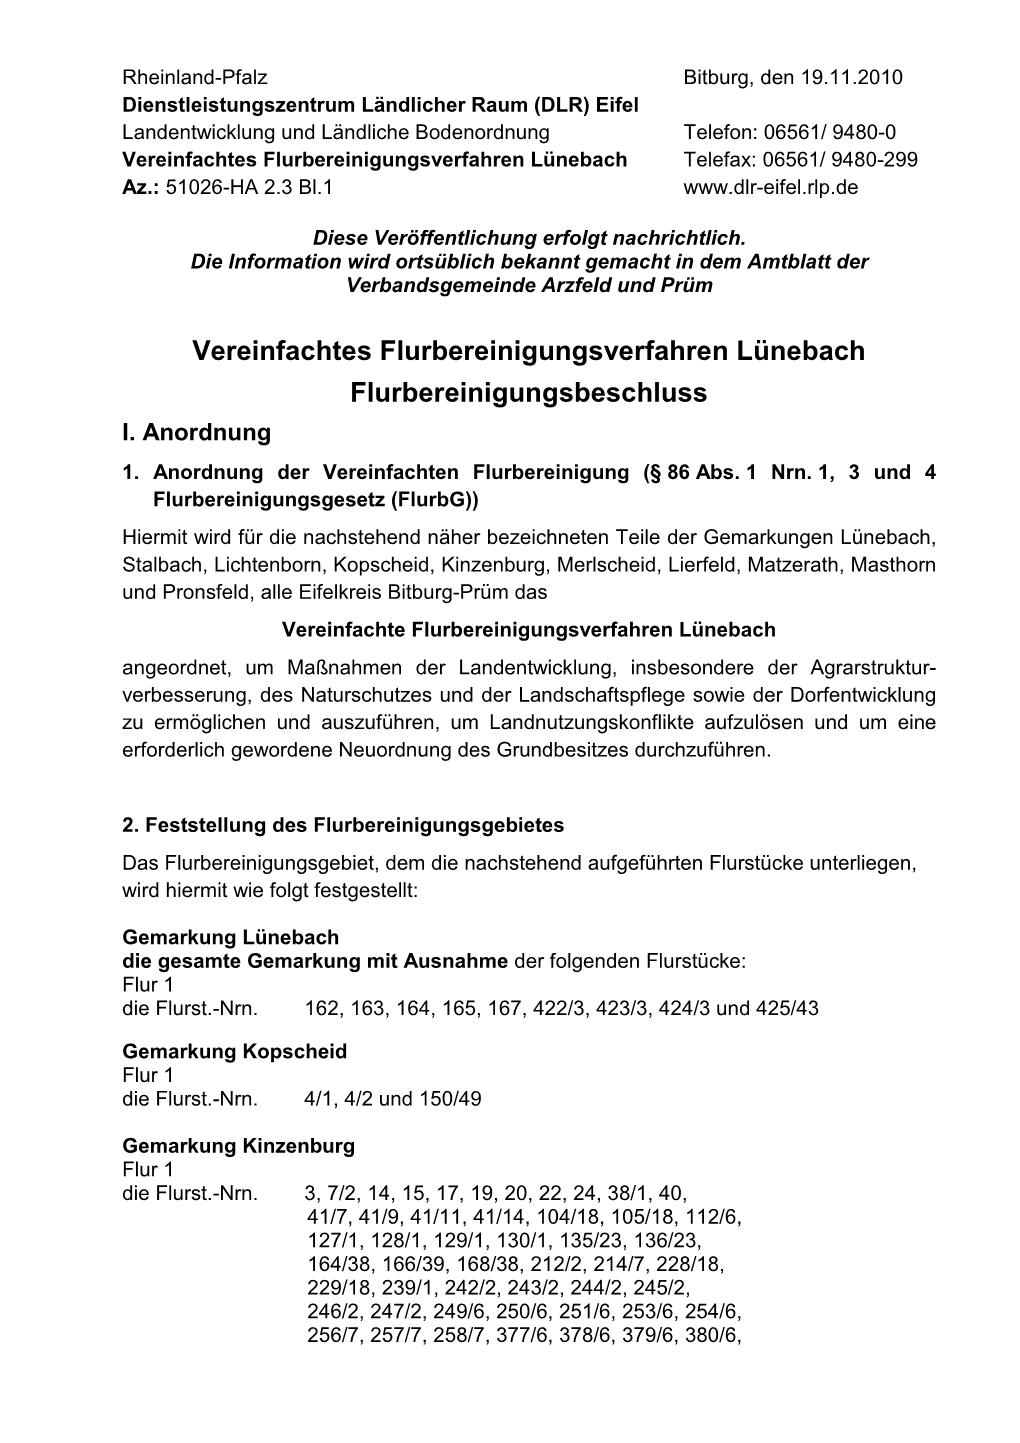 Vereinfachtes Flurbereinigungsverfahren Lünebach Telefax: 06561/ 9480-299 Az.: 51026-HA 2.3 Bl.1